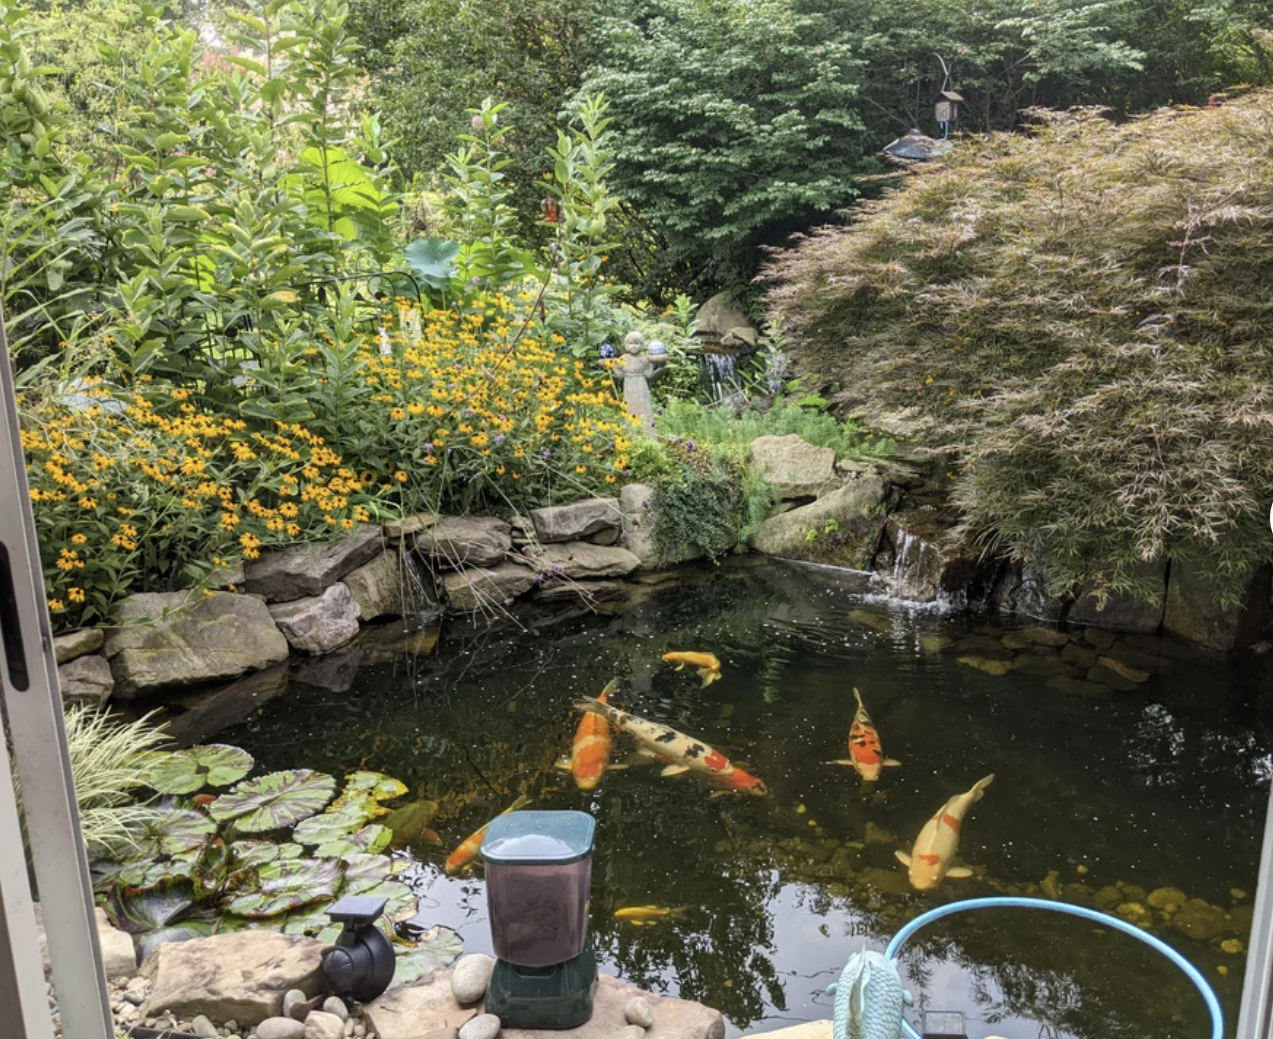 Grandma&#x27;s lush pond with koi fish and surrounding greenery, viewed from above